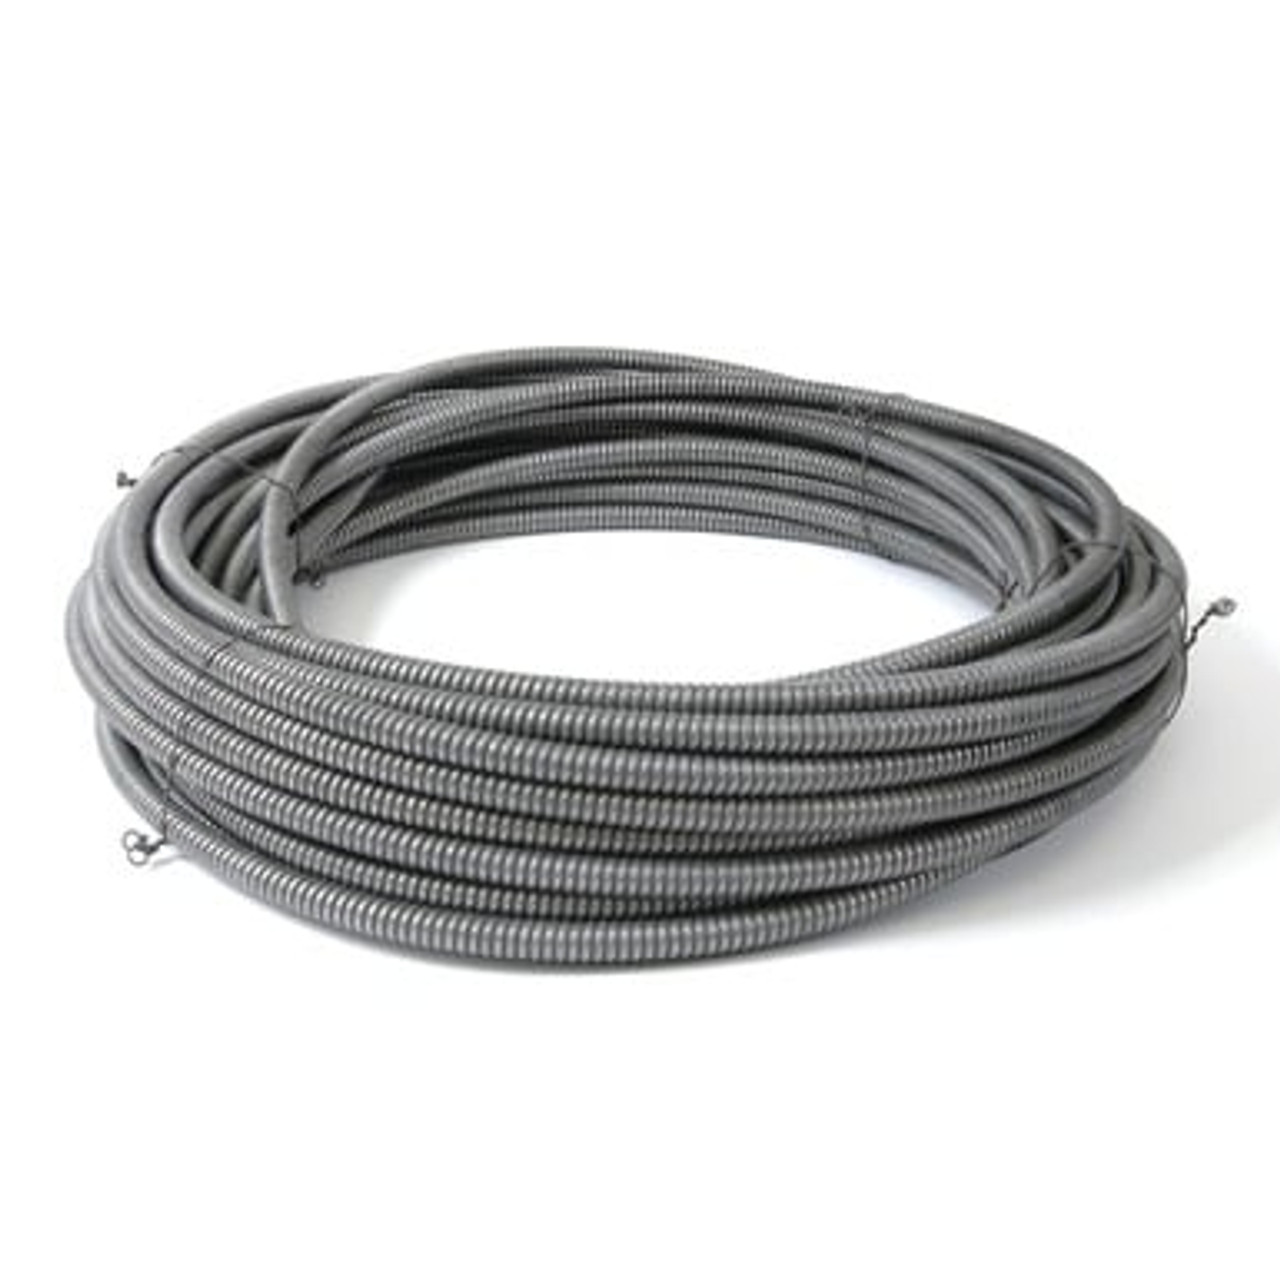 Ridgid® 3/8" X 50' Cable for K400 & K3800 Drain Machines